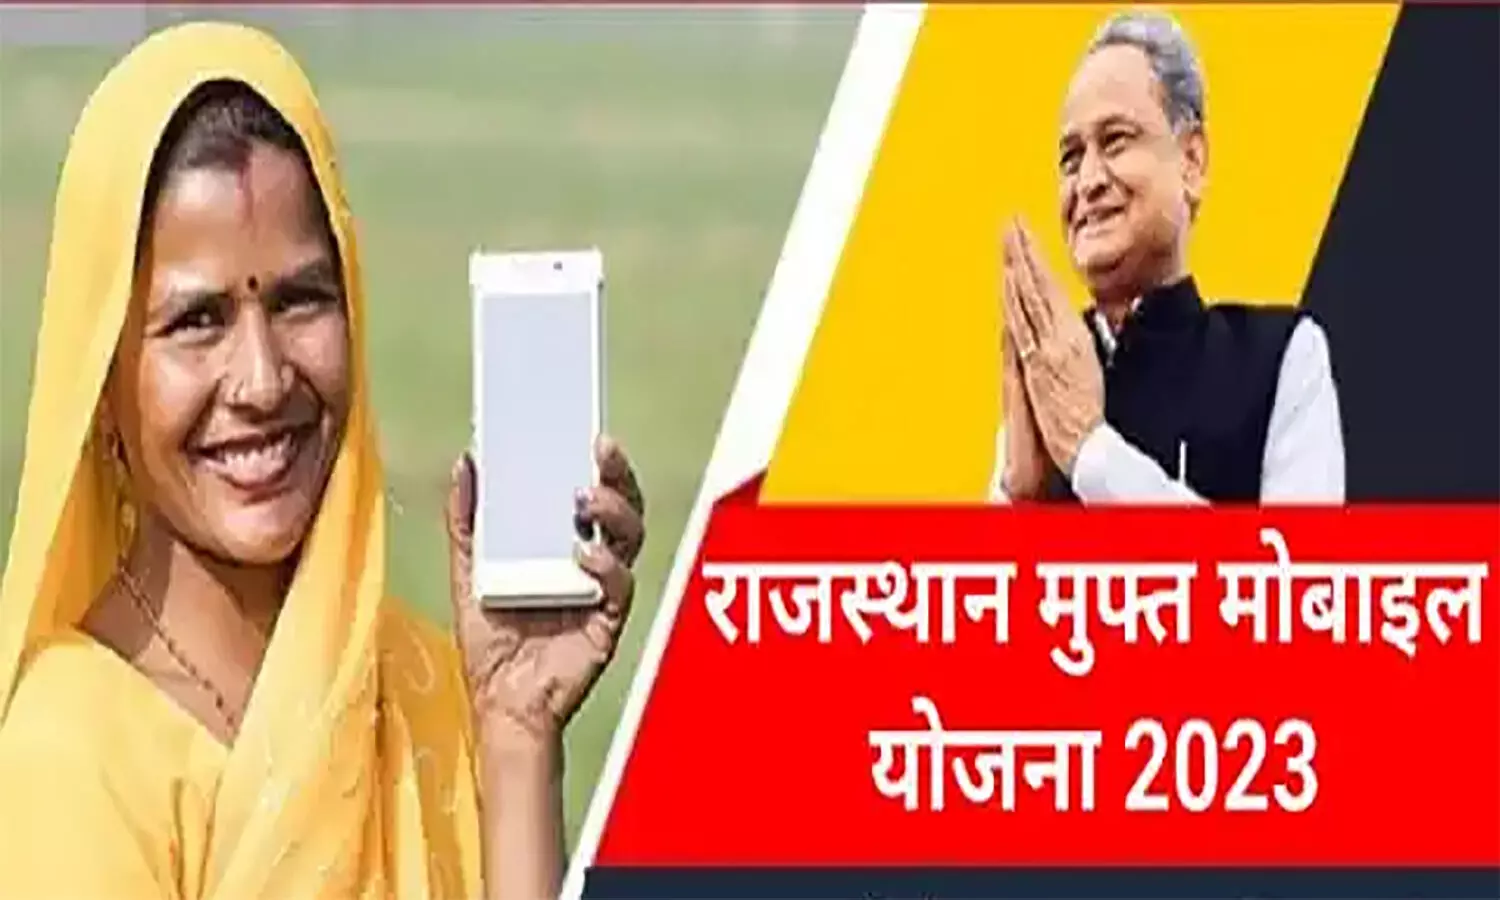 Rajasthan Free Mobile Yojana 2023 को लेकर UPDATE, जानें कब मिलेगा फ्री मोबाइल?